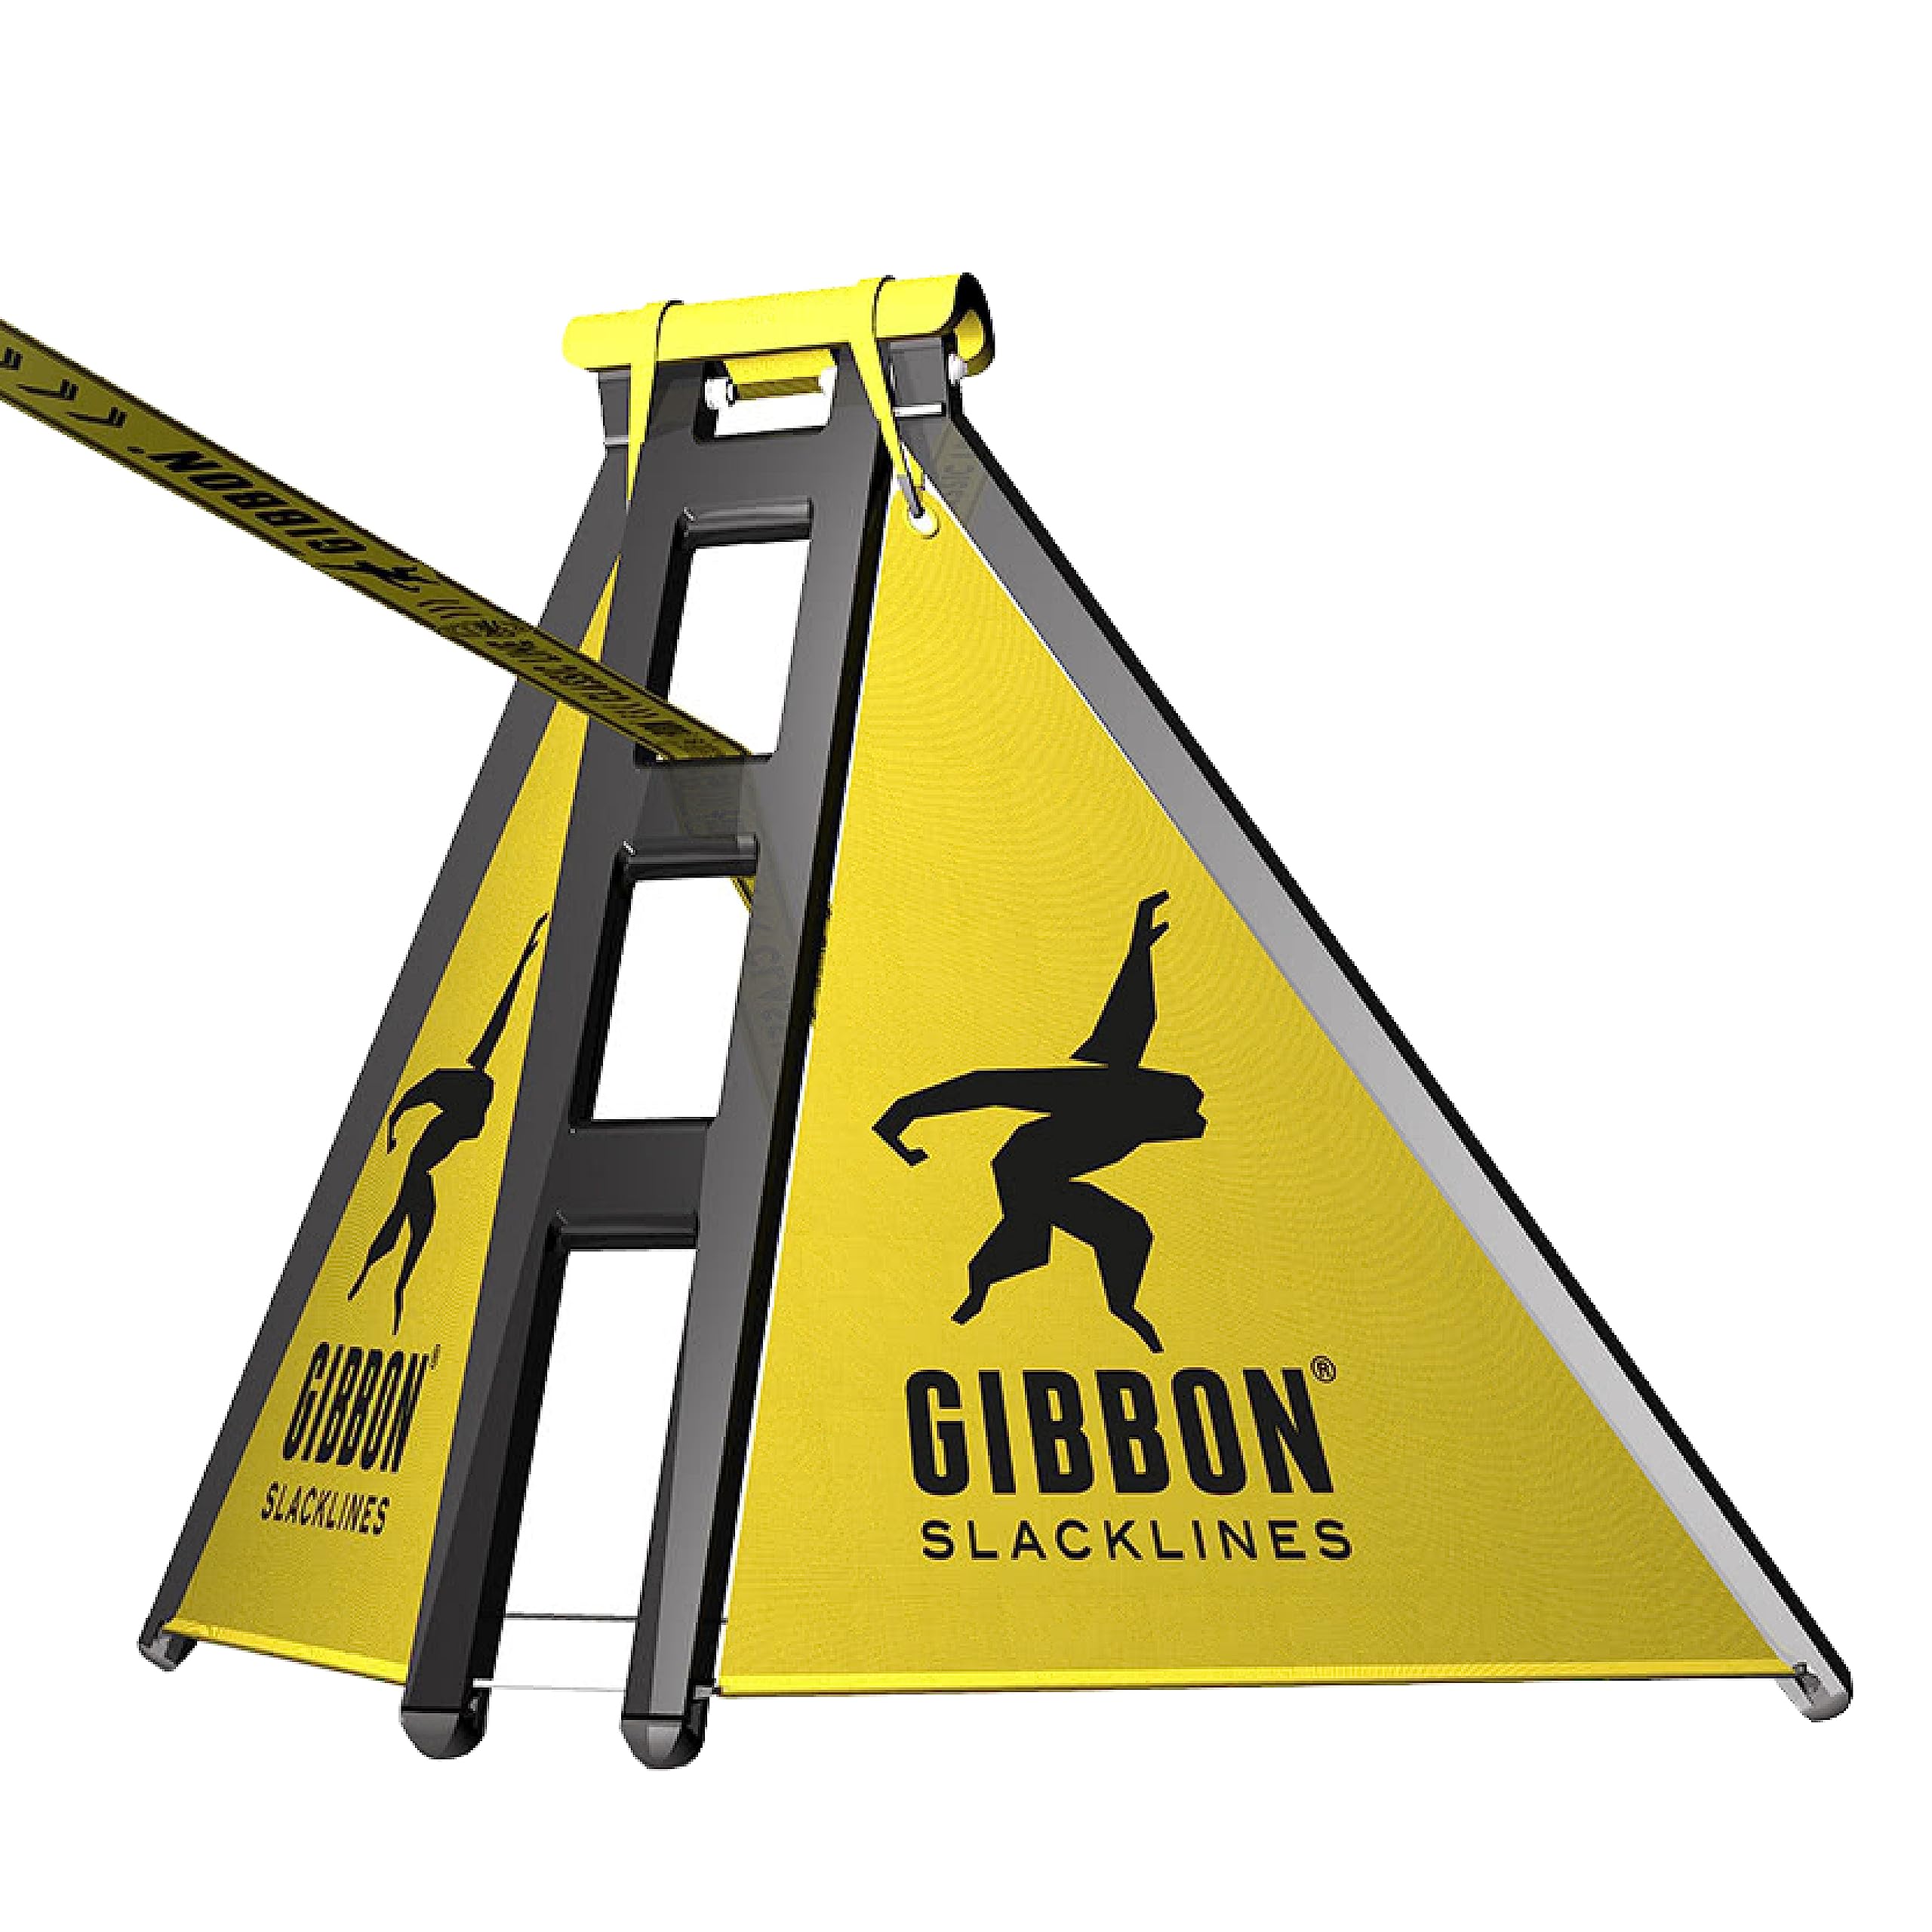 Gibbon Slacklines Slack-Frame | Keine Bäume benötigt | Lackierter Metallrahmen | Wetterfestes Segel | Variable Aufbauhöhen (30cm, 50cm, 70cm) | Einfache Montage | Kompatibel mit Gibbon Slacklines